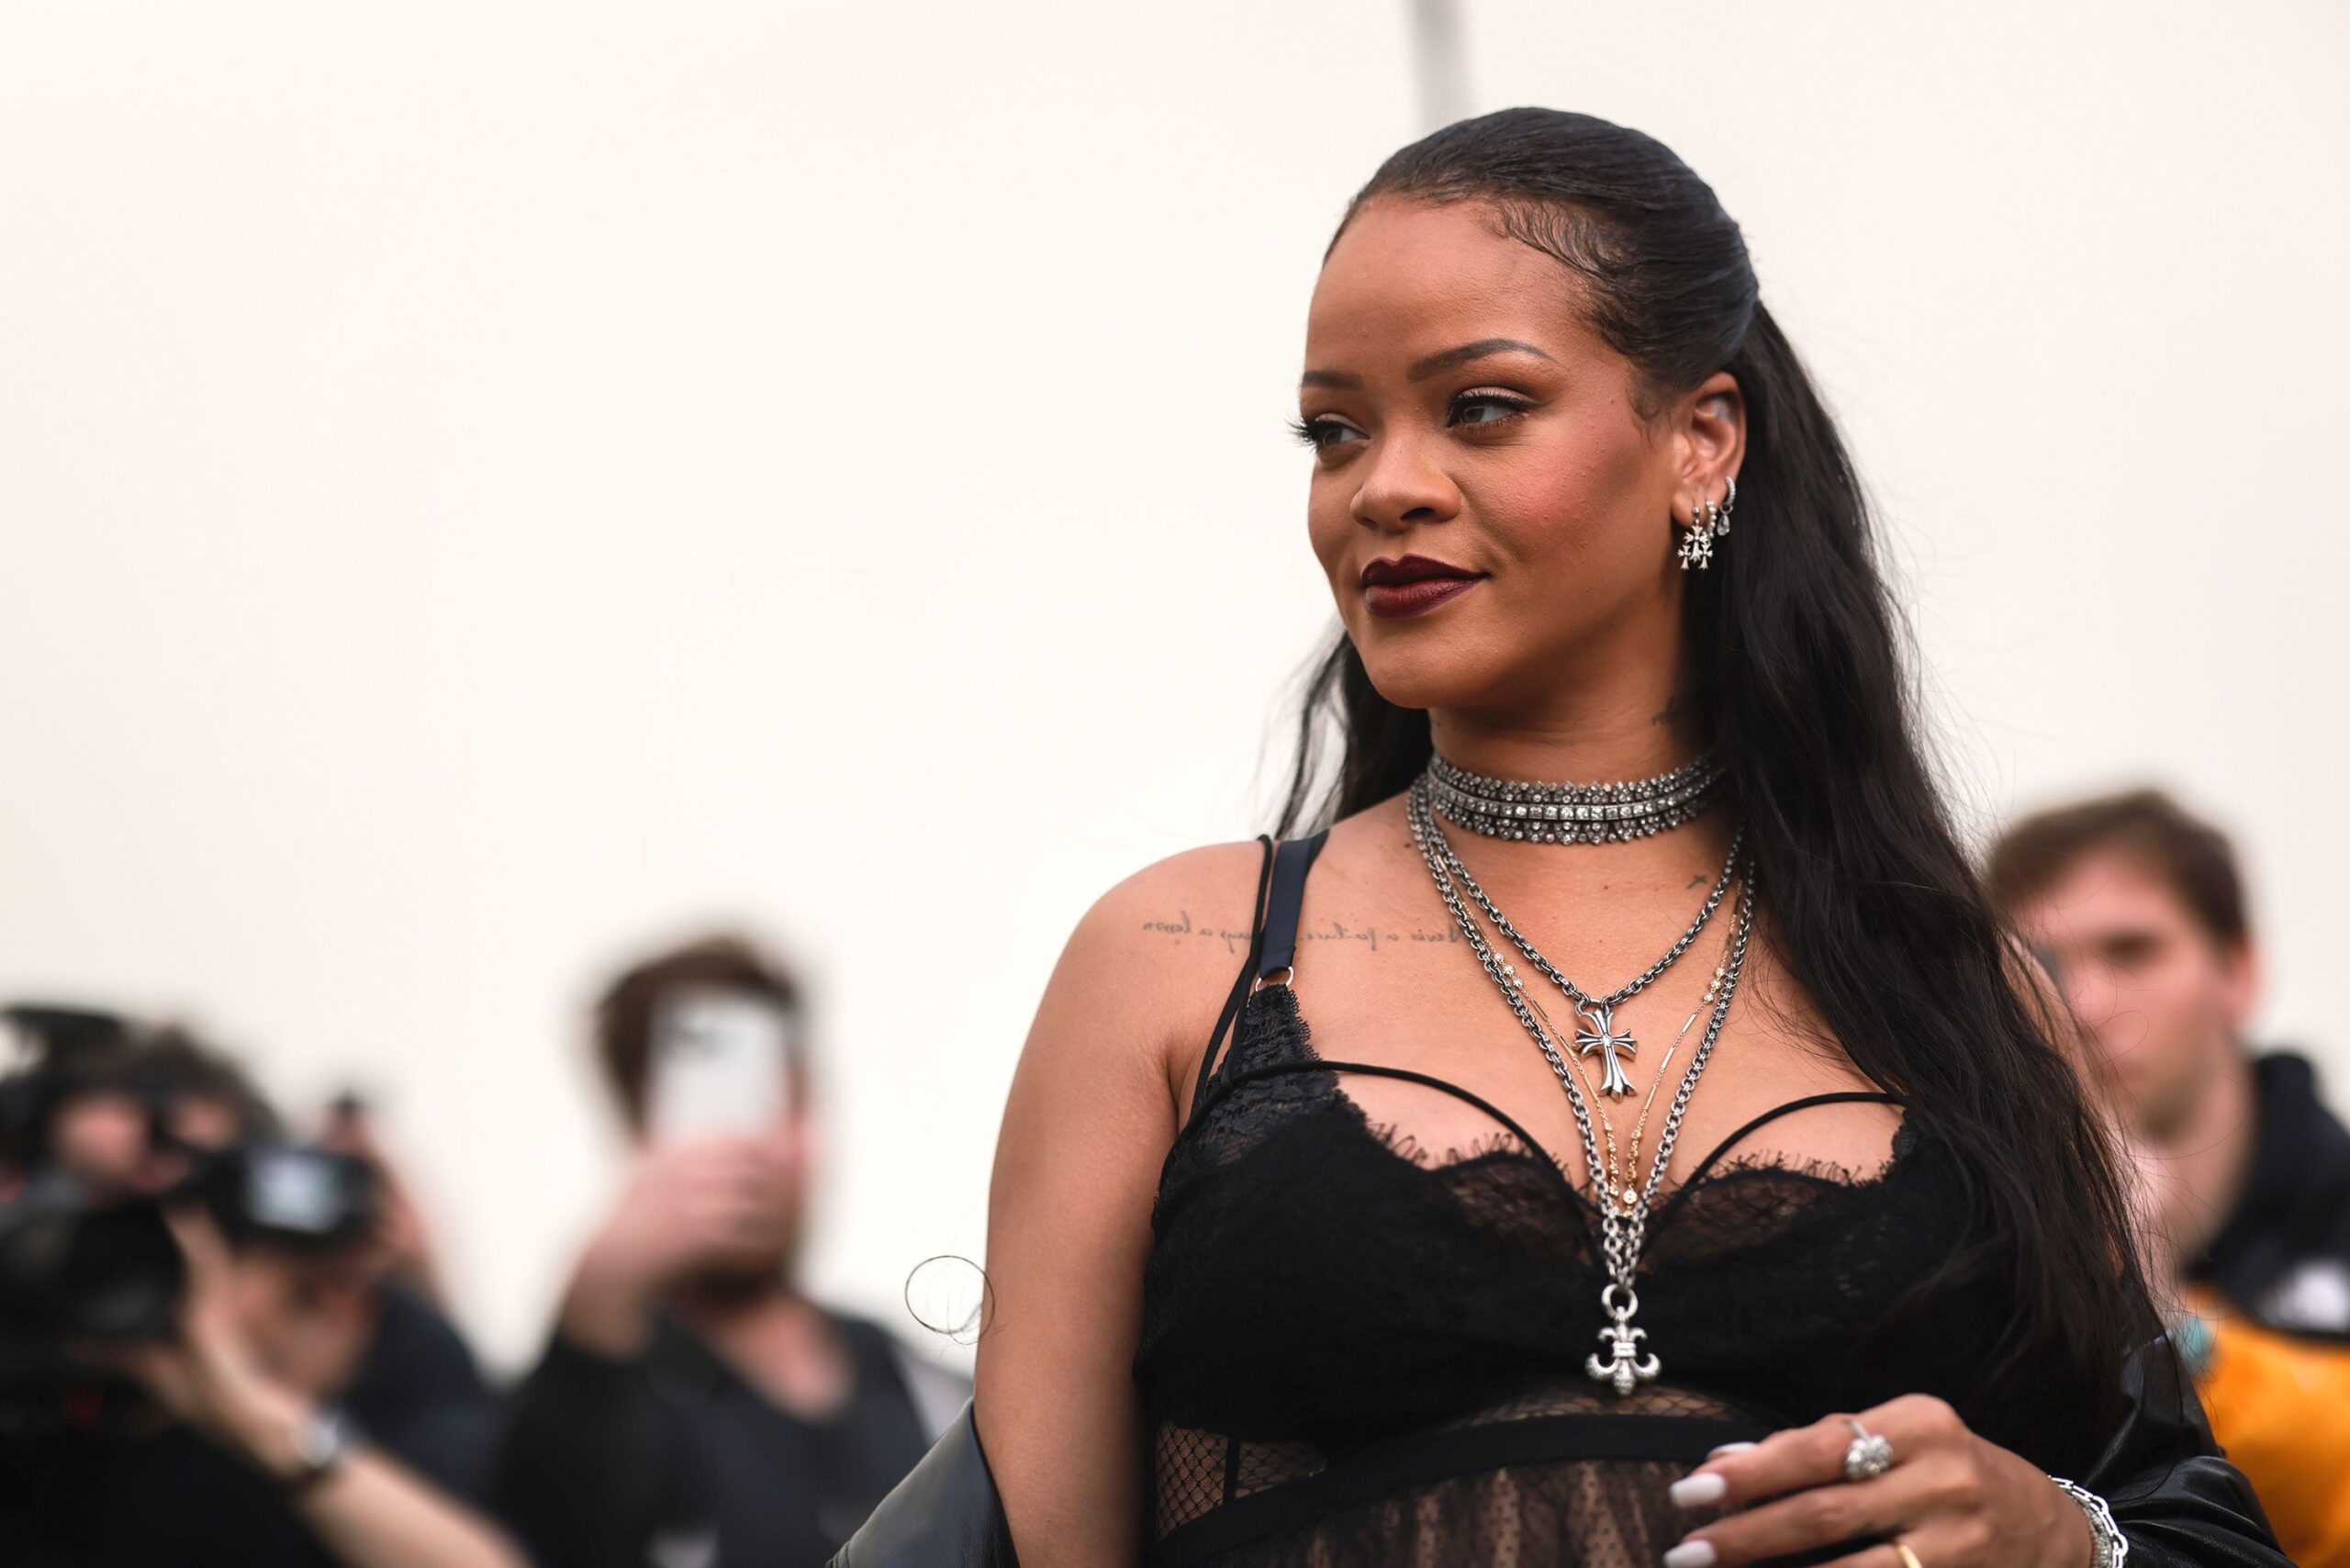 Rihanna to perform “Lift Me Up” at 95th Academy Awards.